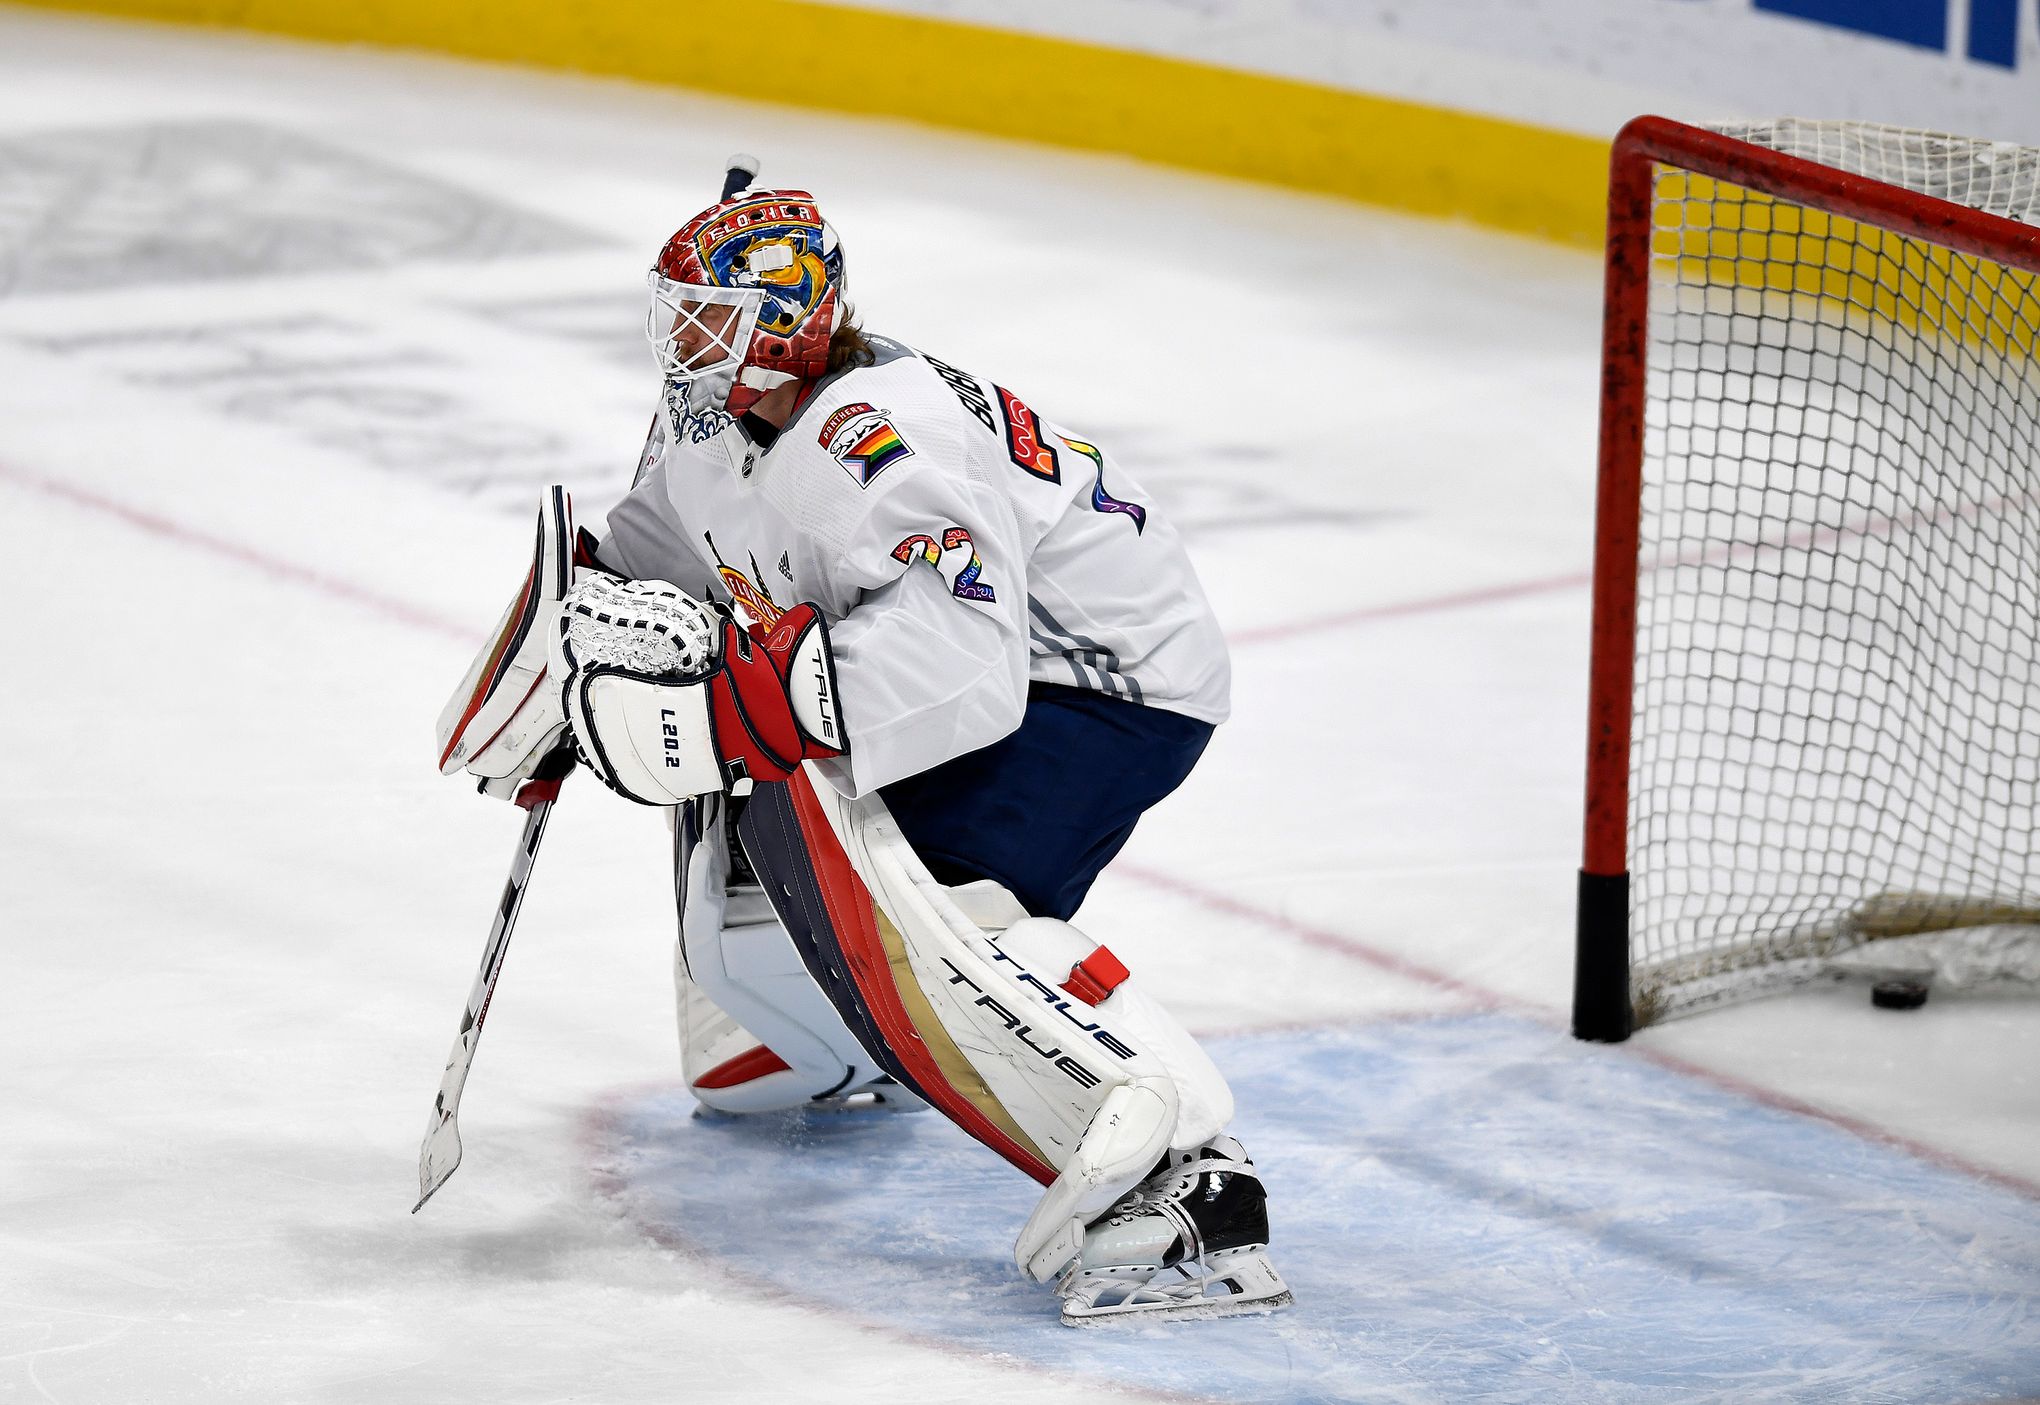 Predators prospect Luke Prokop 'disappointed' by NHL's Pride Night